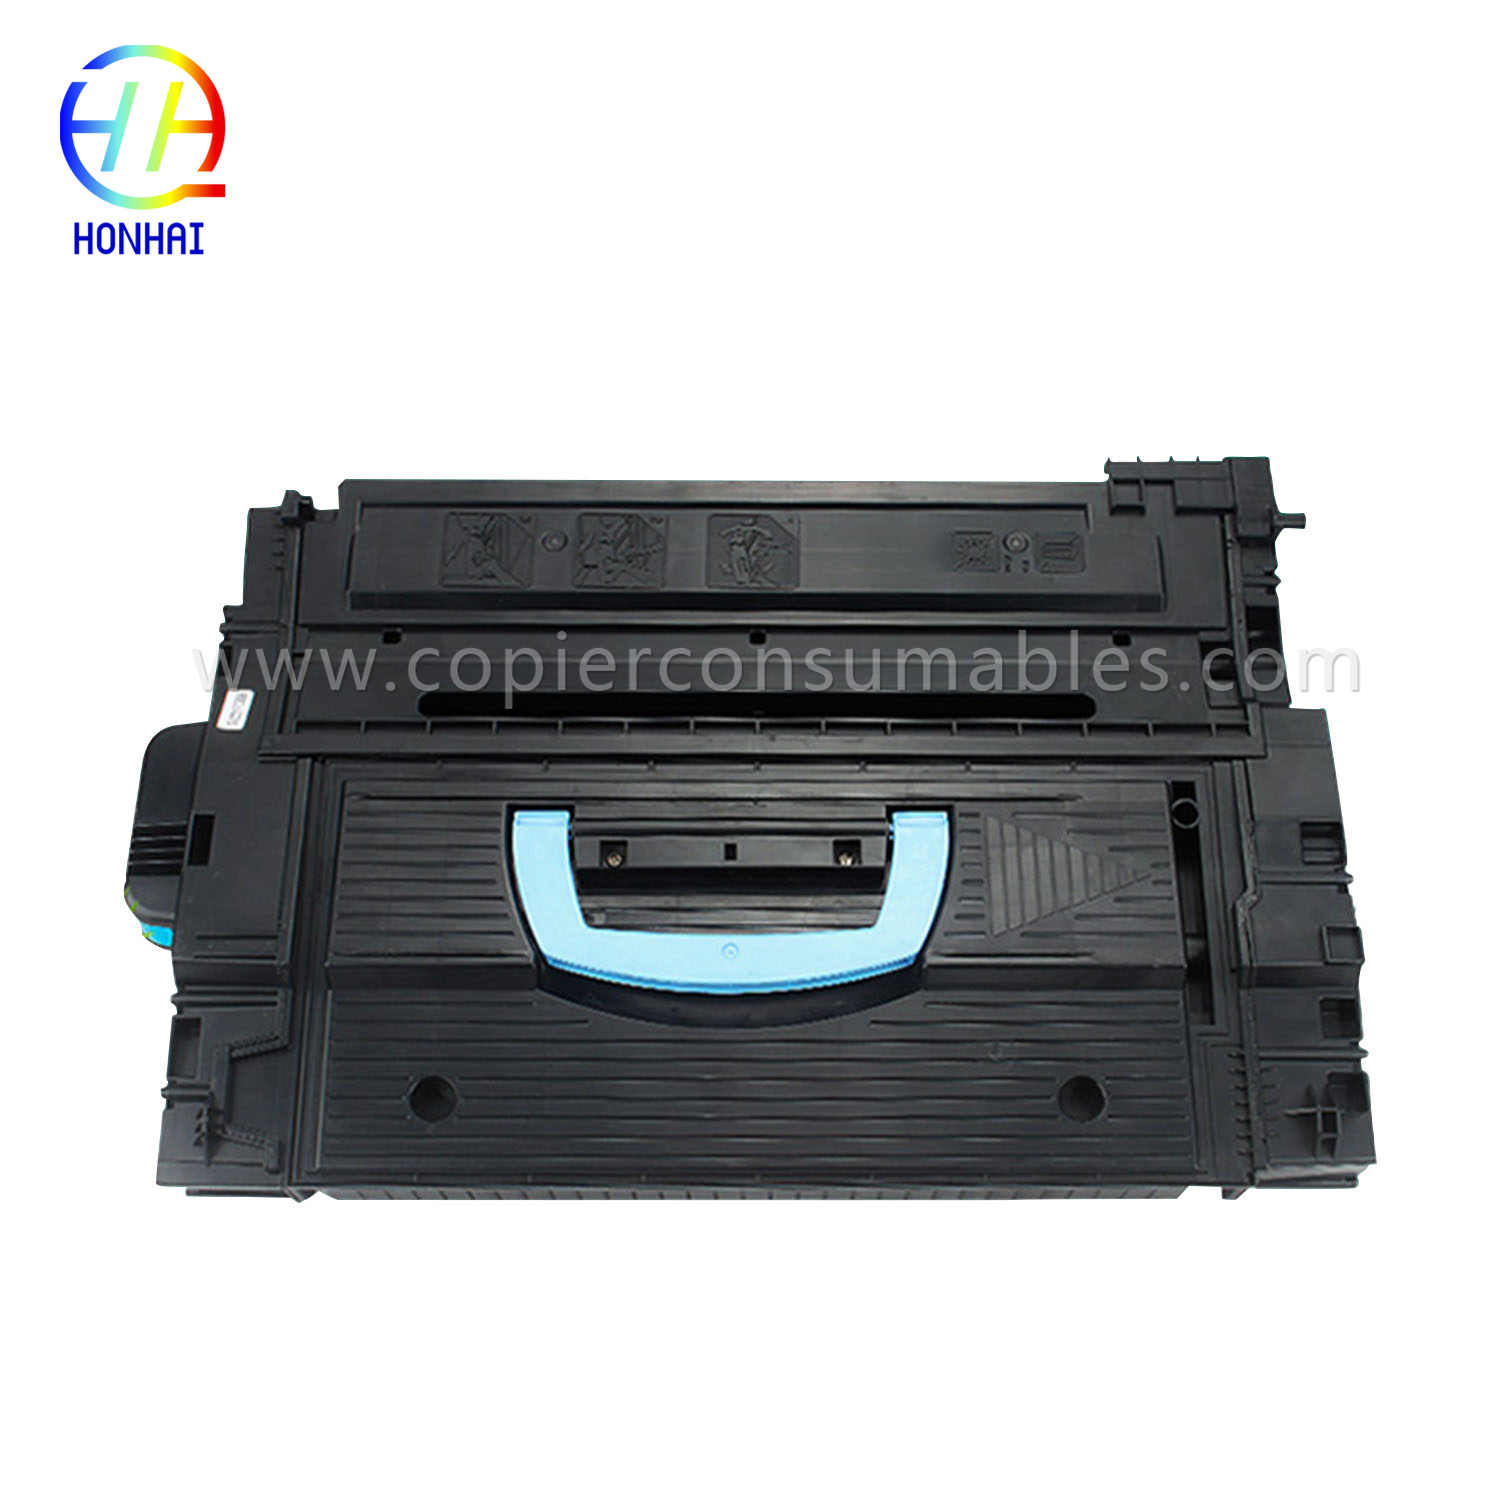 Toner Cartridge for HP 9040 9050 9059 拷贝